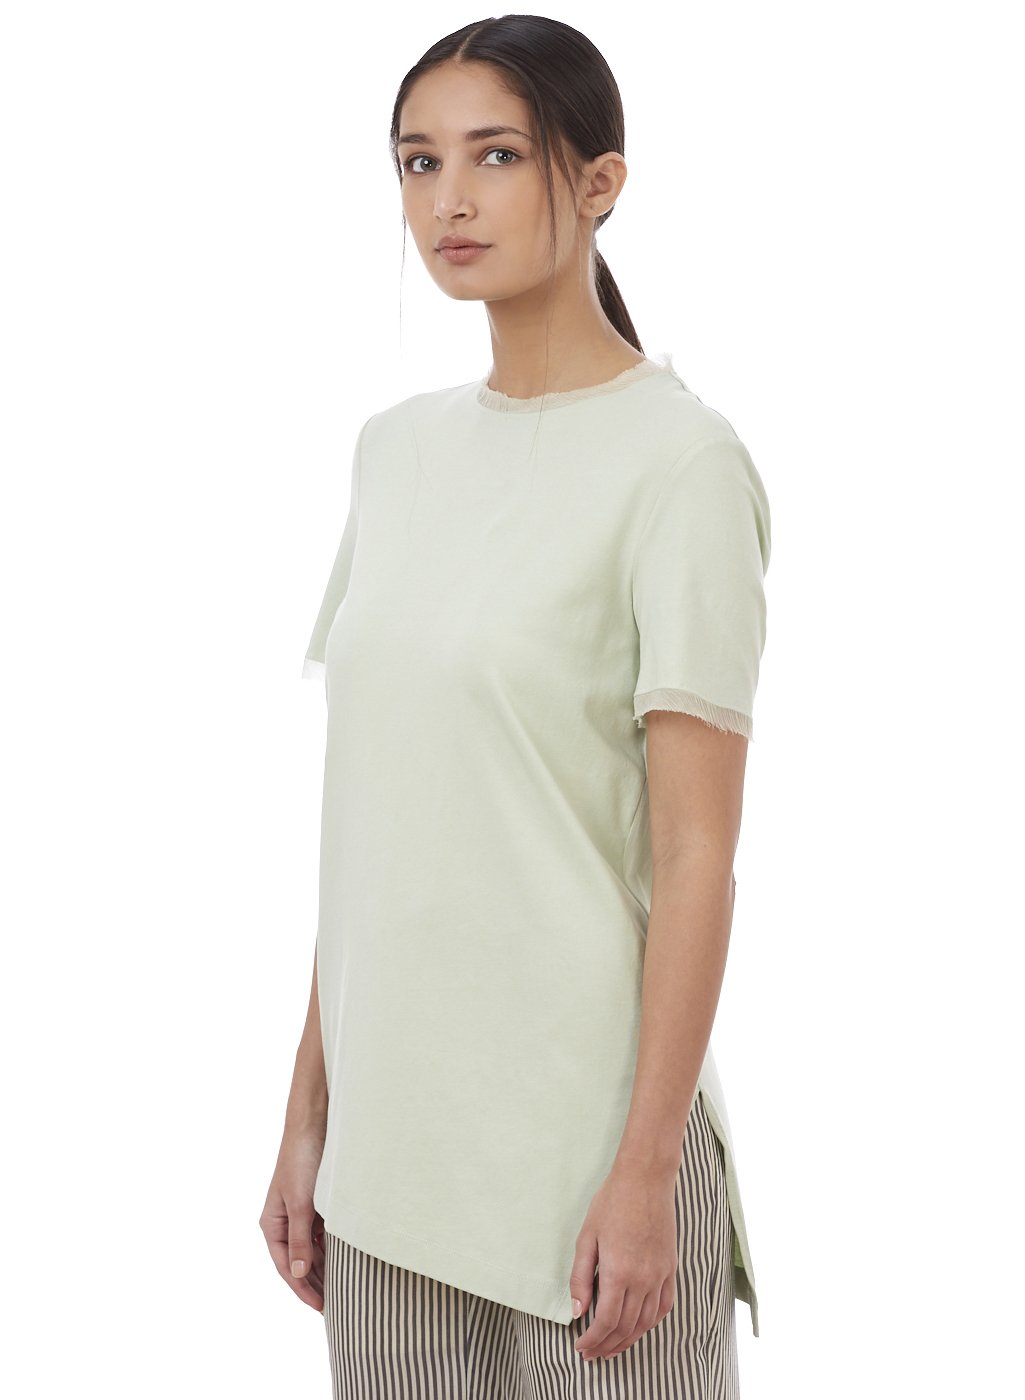 Macy T Shirt - Genes online store 2020